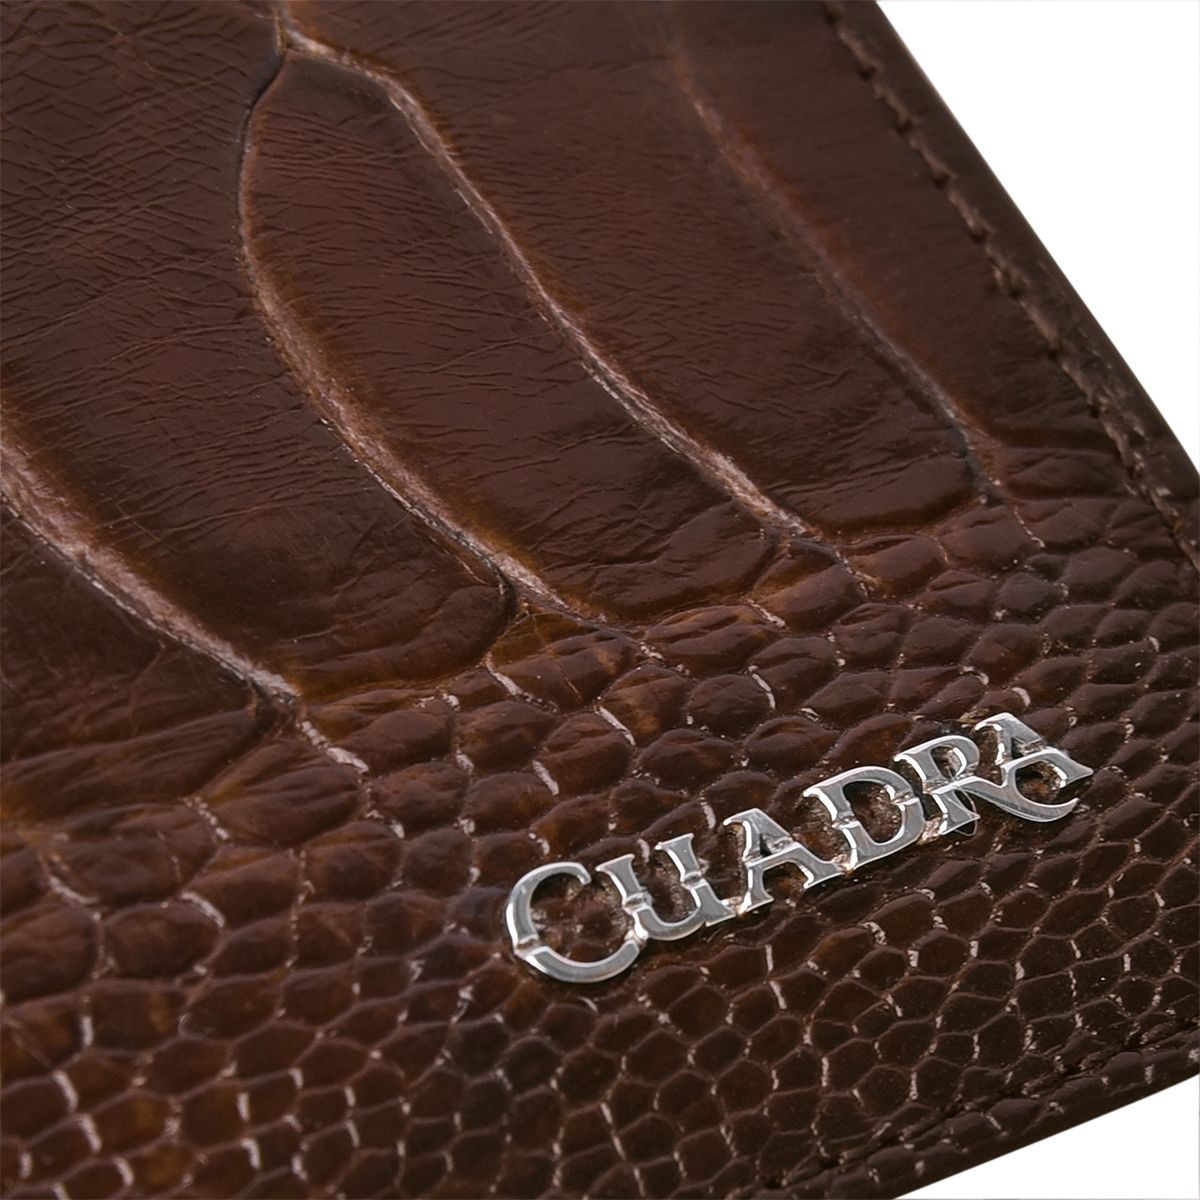 B2910PA - Cuadra chocolate classic ostrich leg bi fold wallet for men-CUADRA-Kuet-Cuadra-Boots